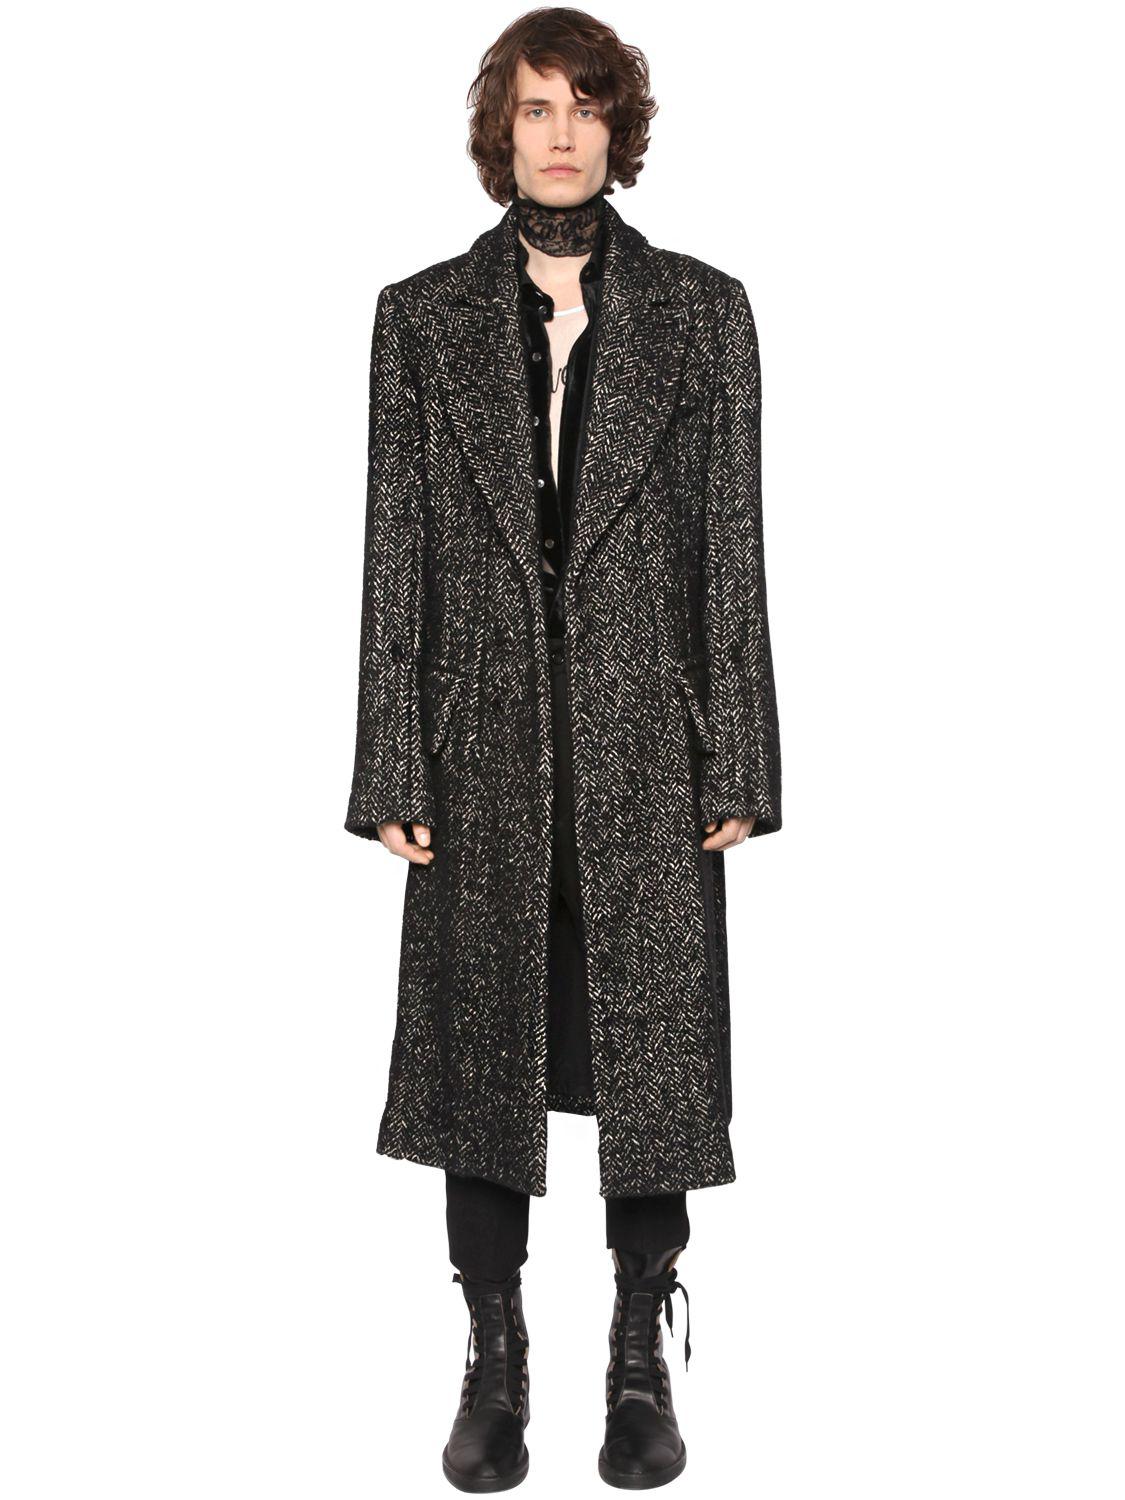 Ann Demeulemeester Oversized Long Wool Tweed Coat in Black for Men - Lyst